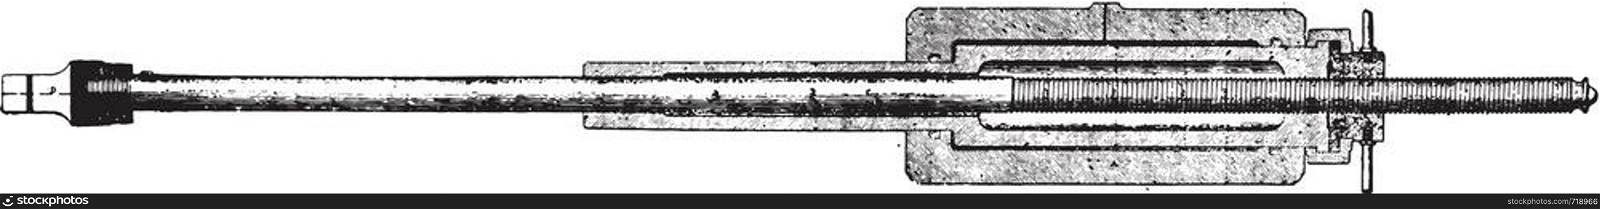 Longitudinal section of the press cylinder, vintage engraved illustration. Industrial encyclopedia E.-O. Lami - 1875.